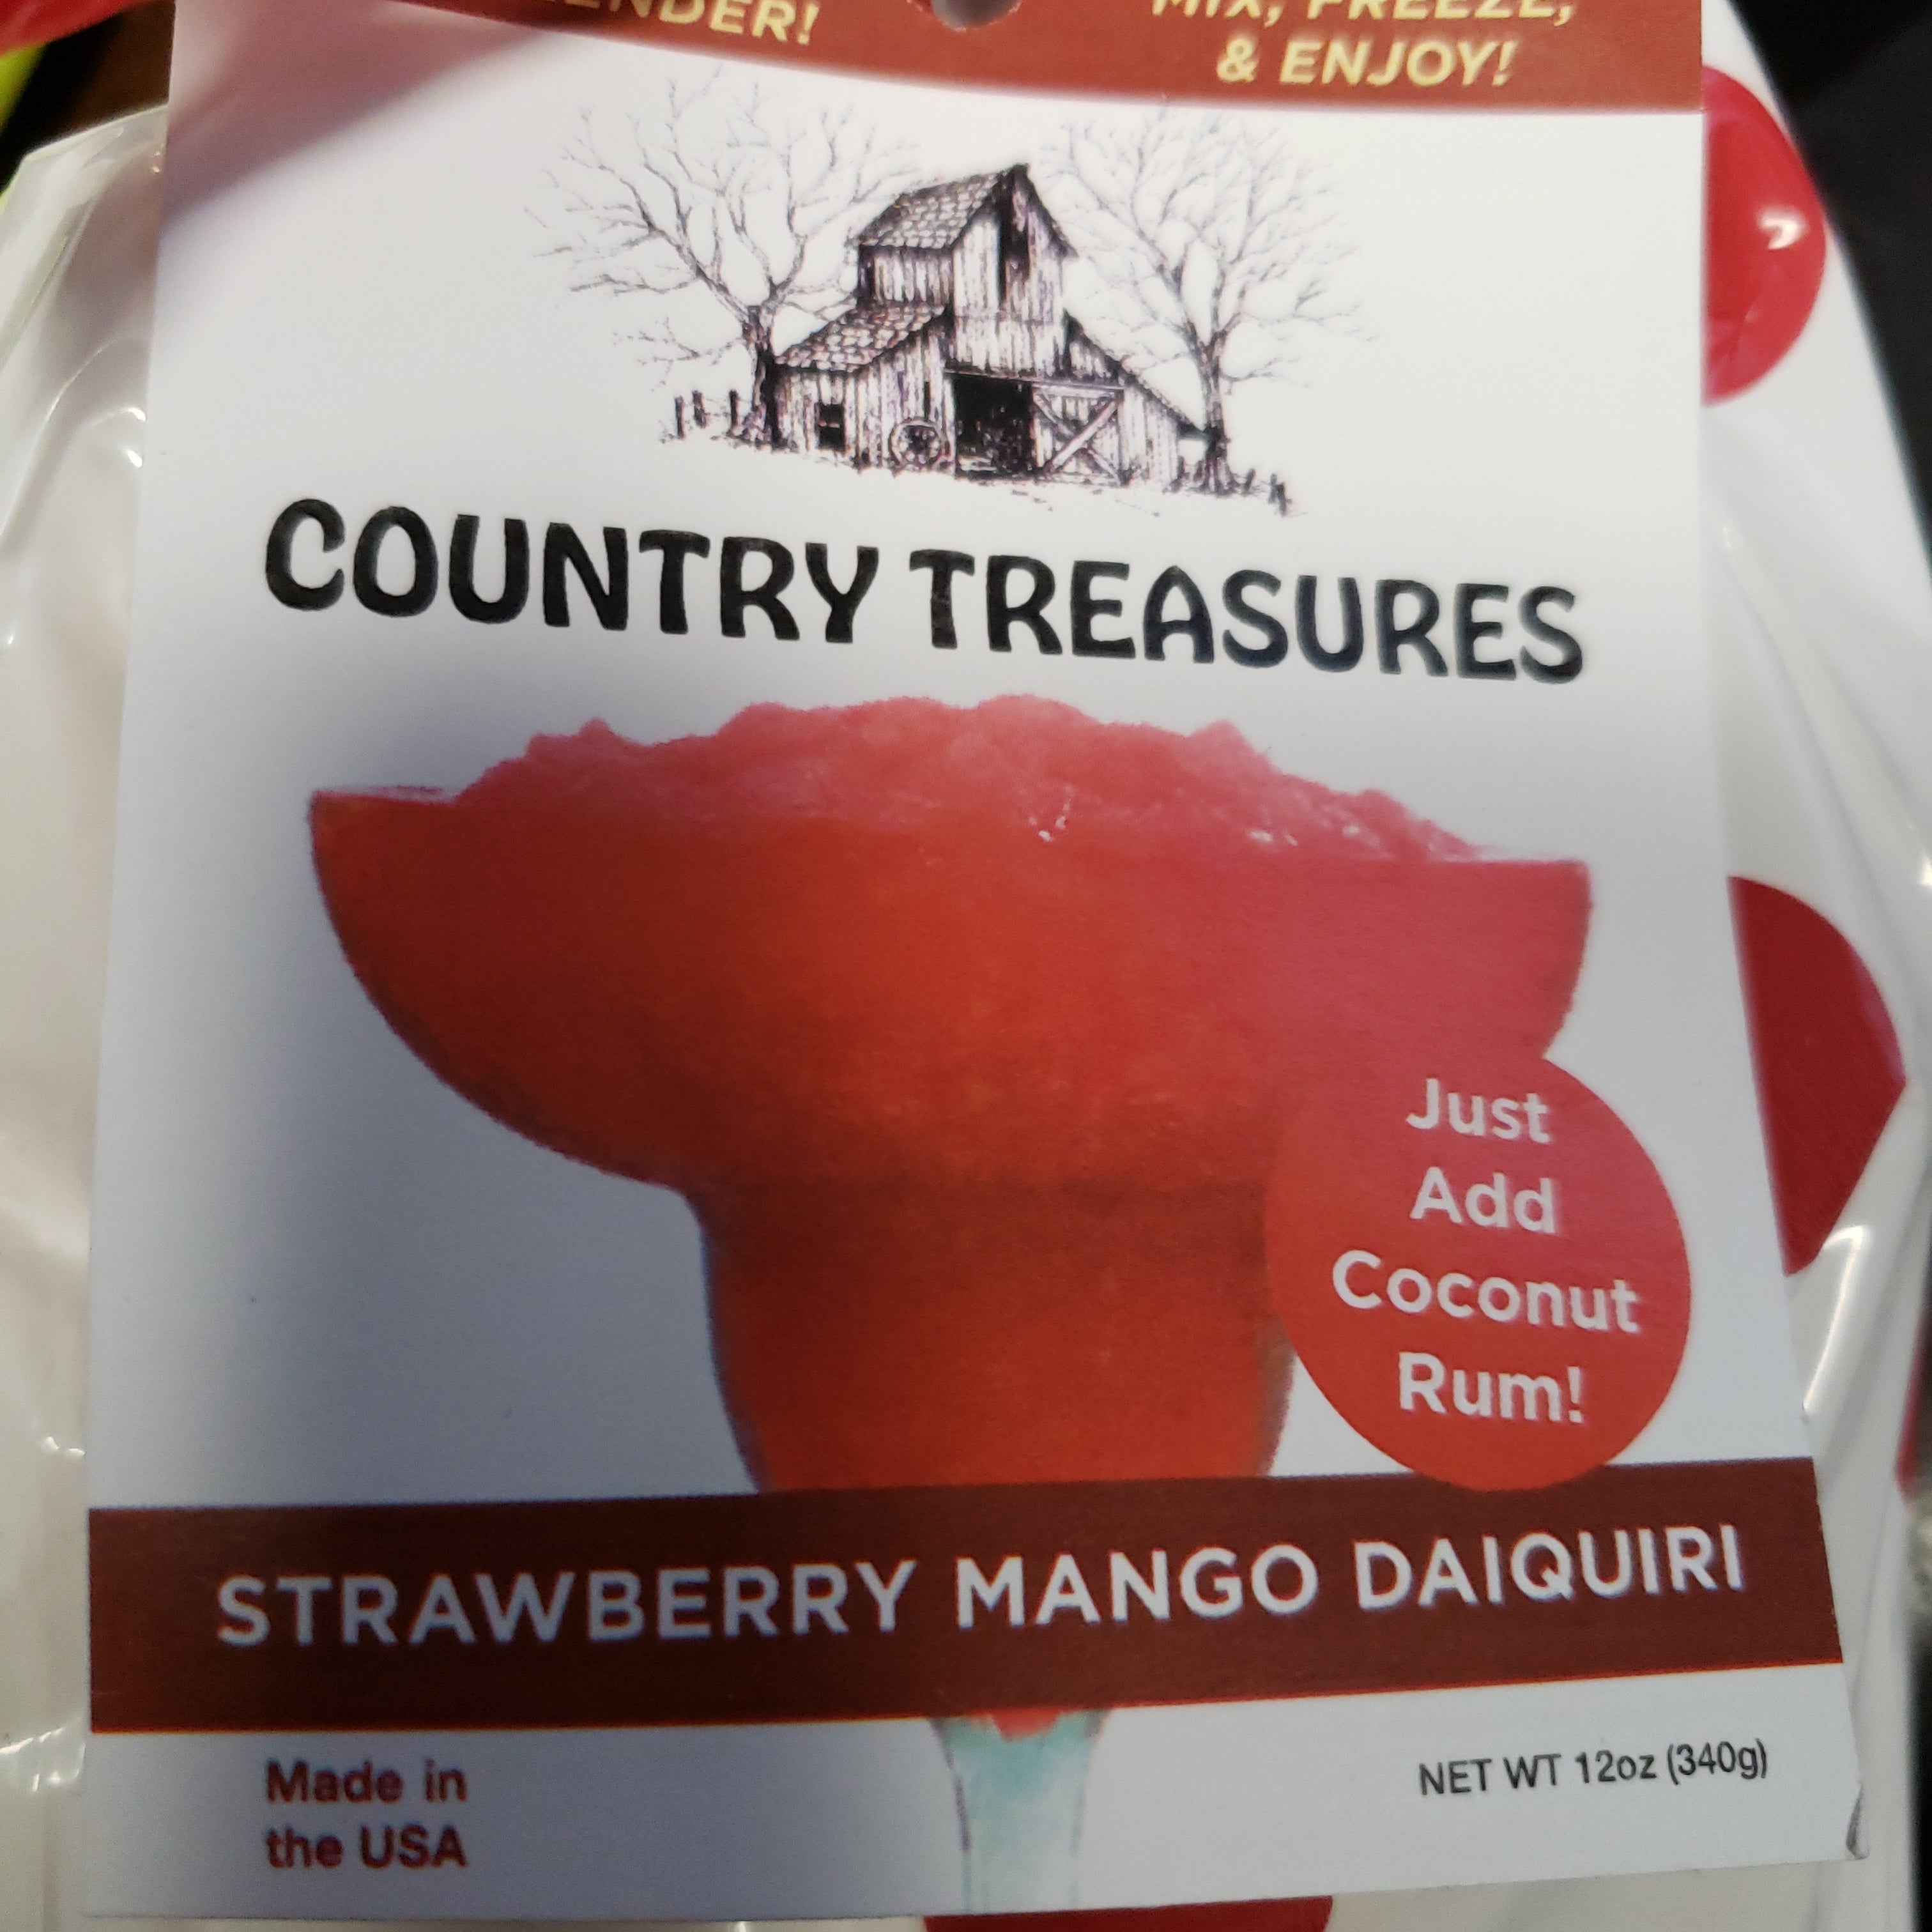 Strawberry mango daiquiri